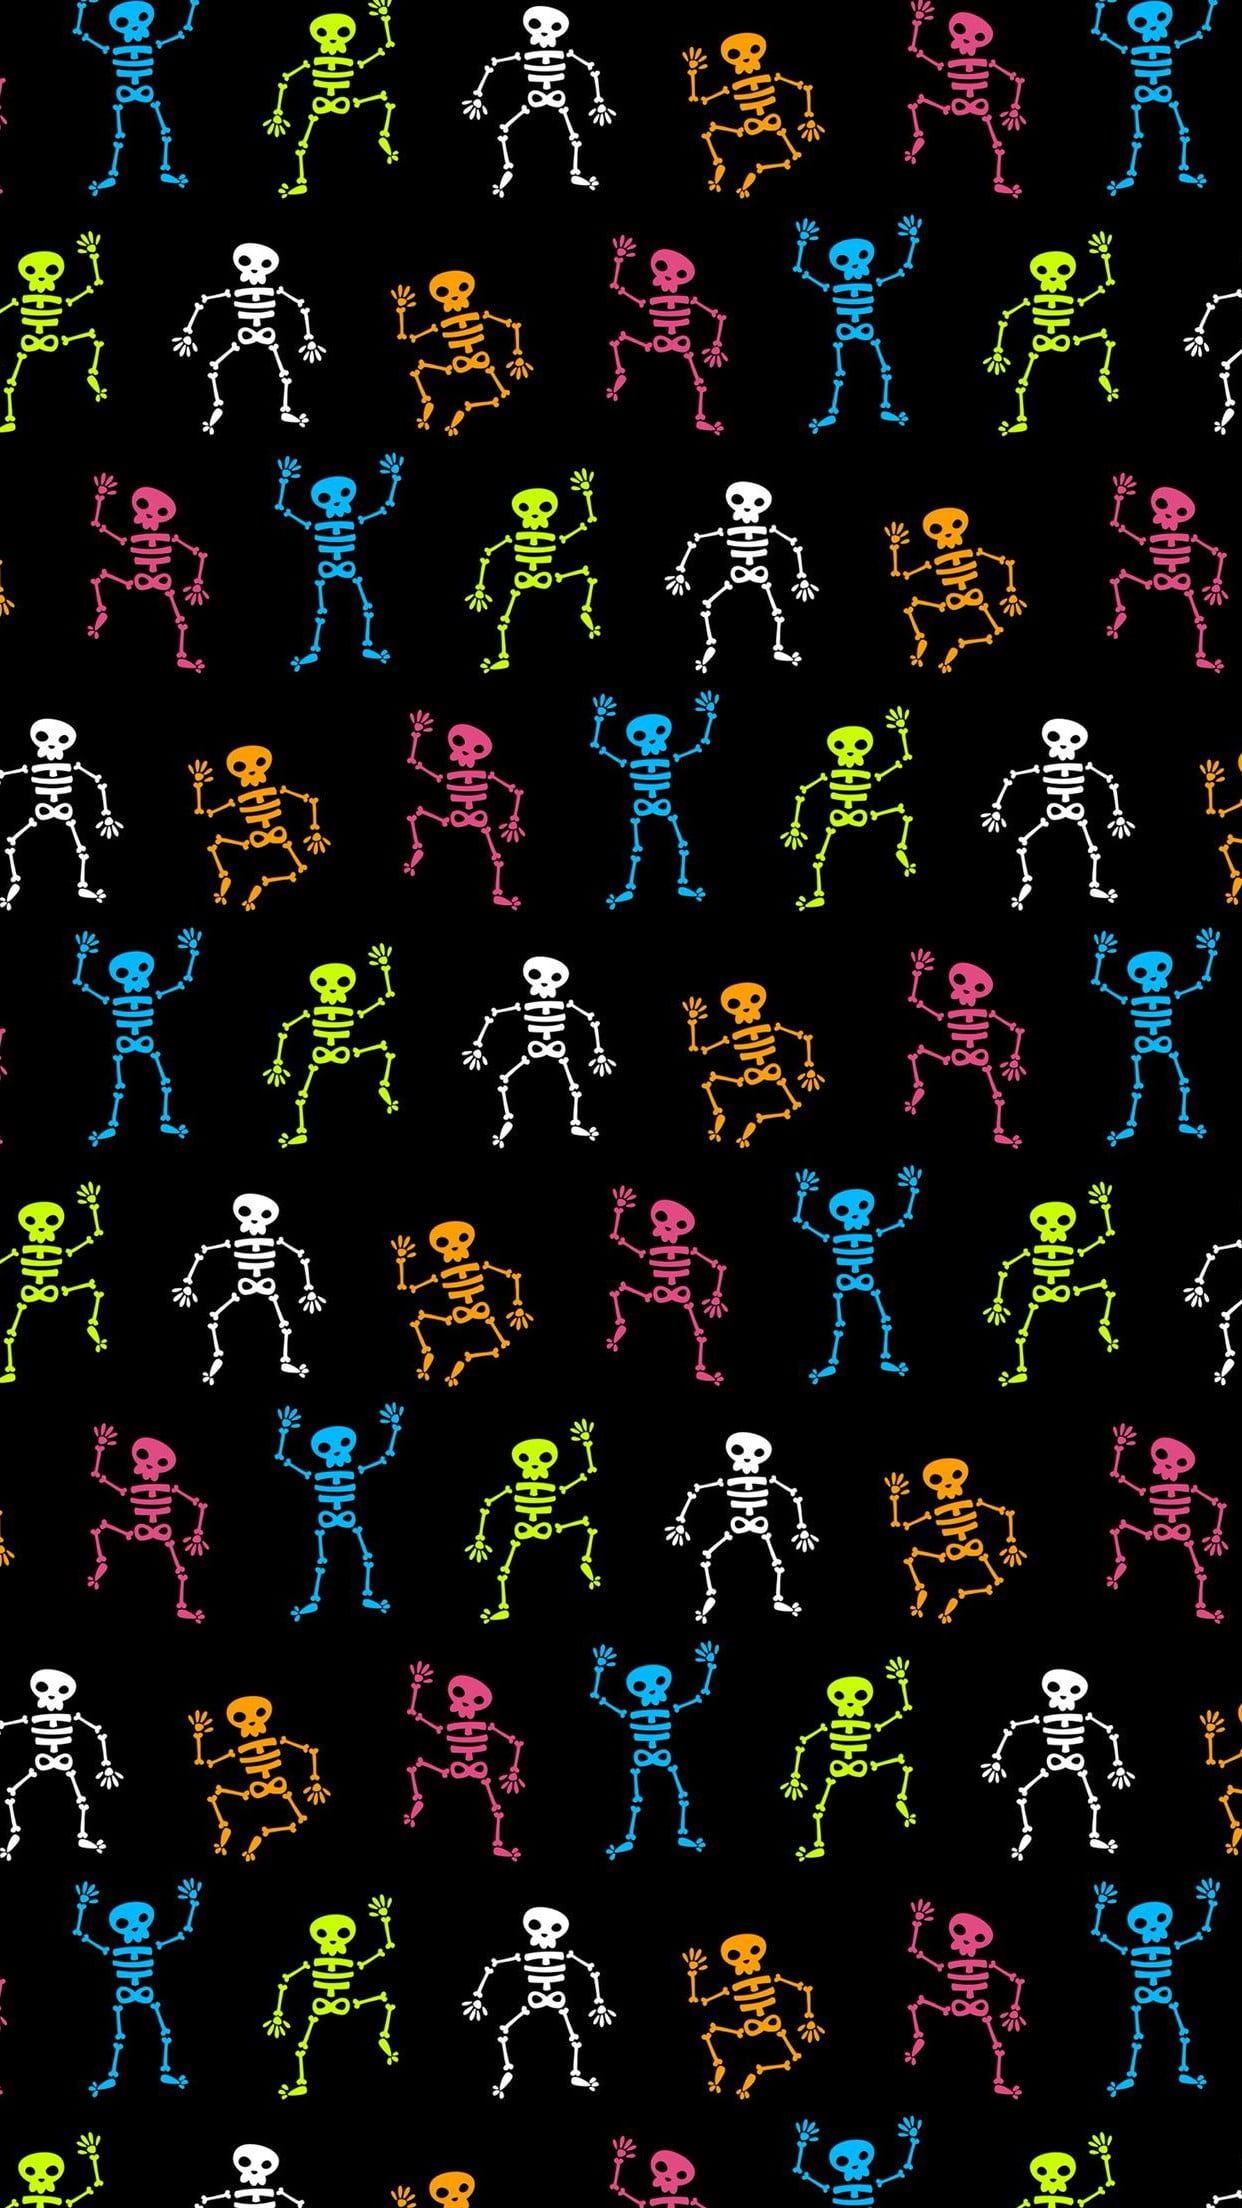 Share 58+ skeleton wallpaper iphone best - in.cdgdbentre